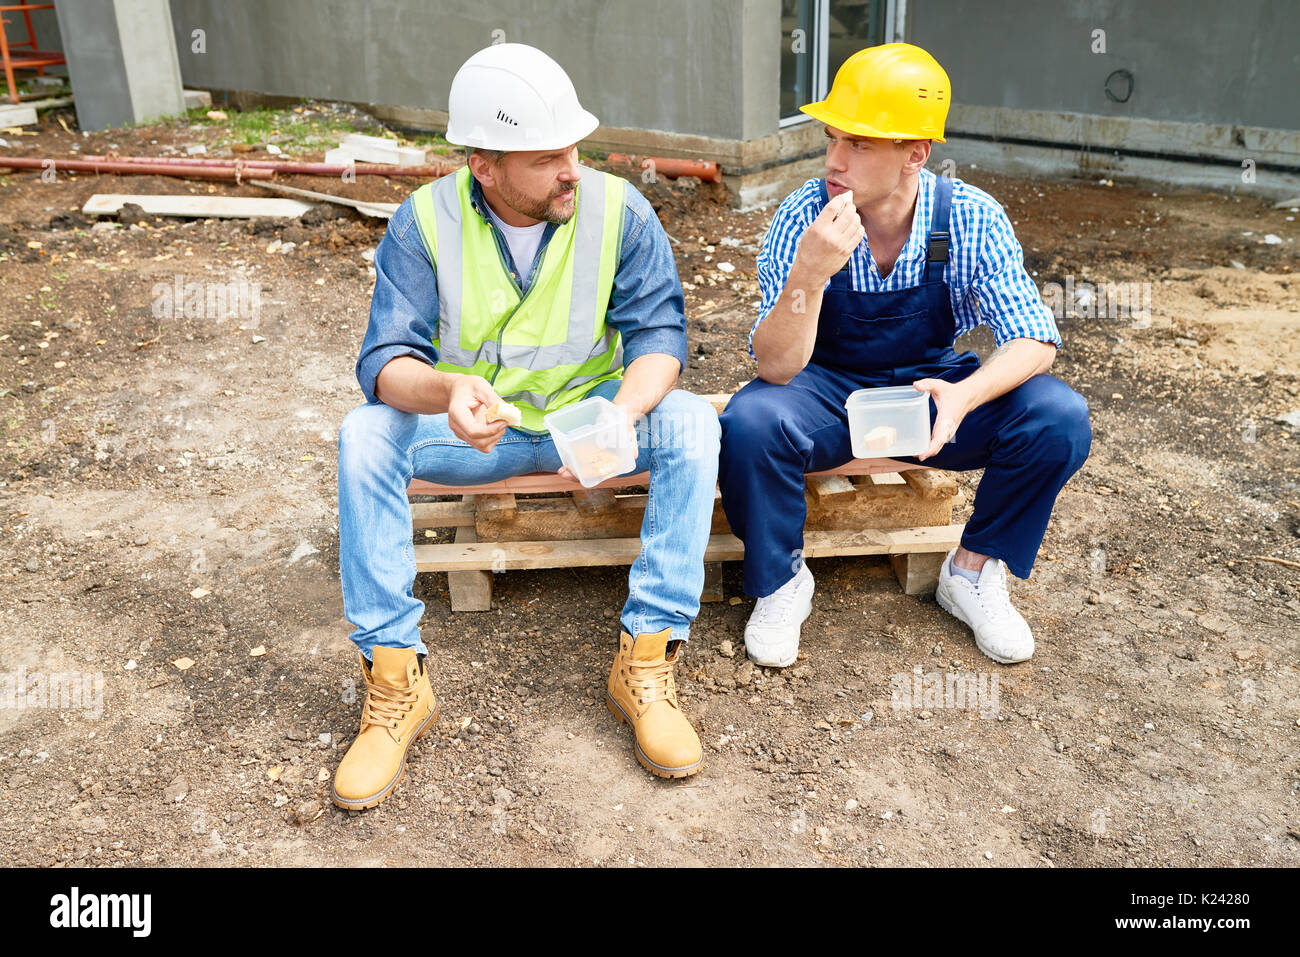 Construction workers lunch break